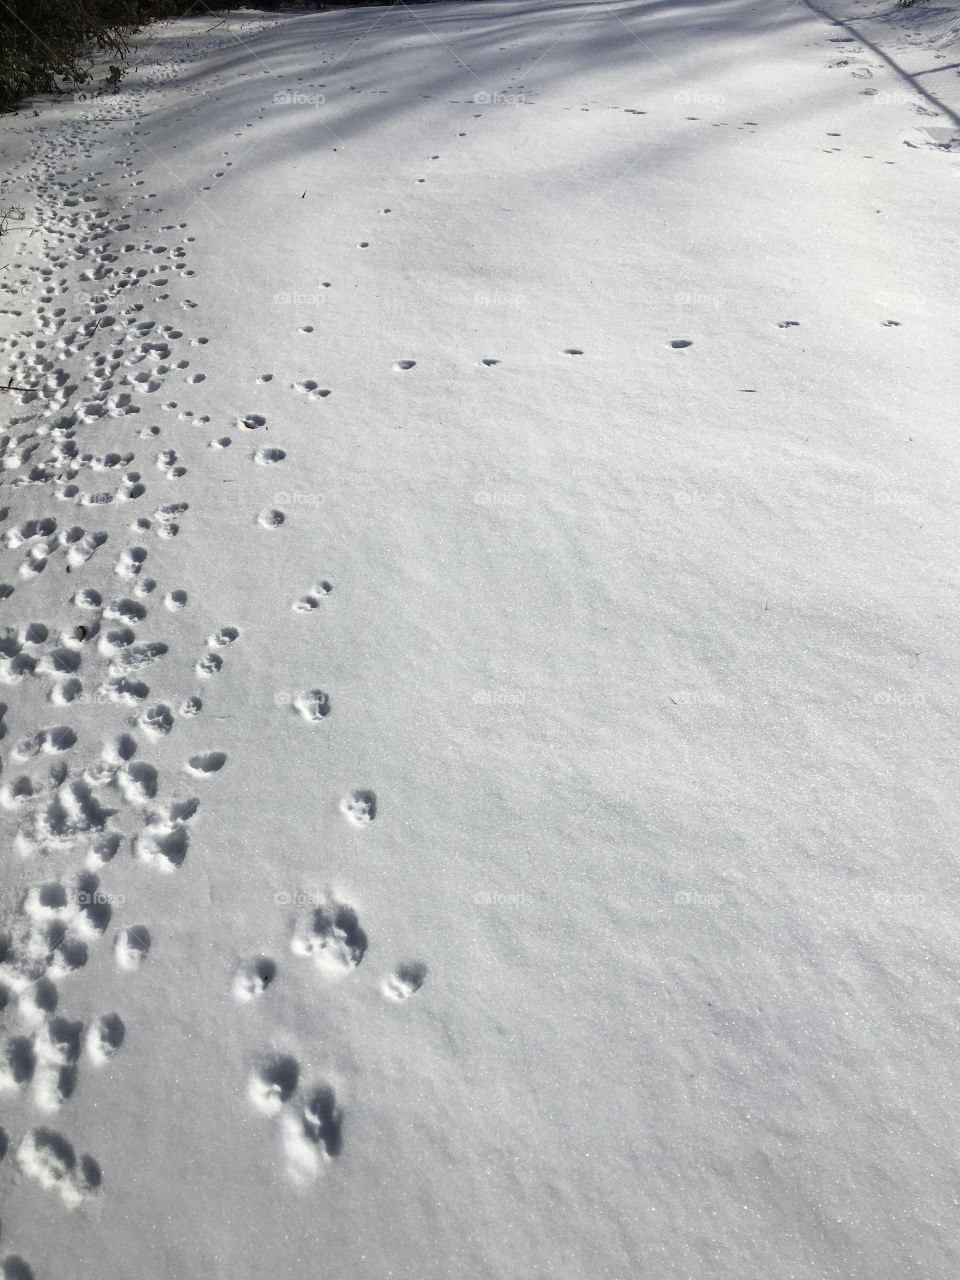 Fox footprints in the snow.